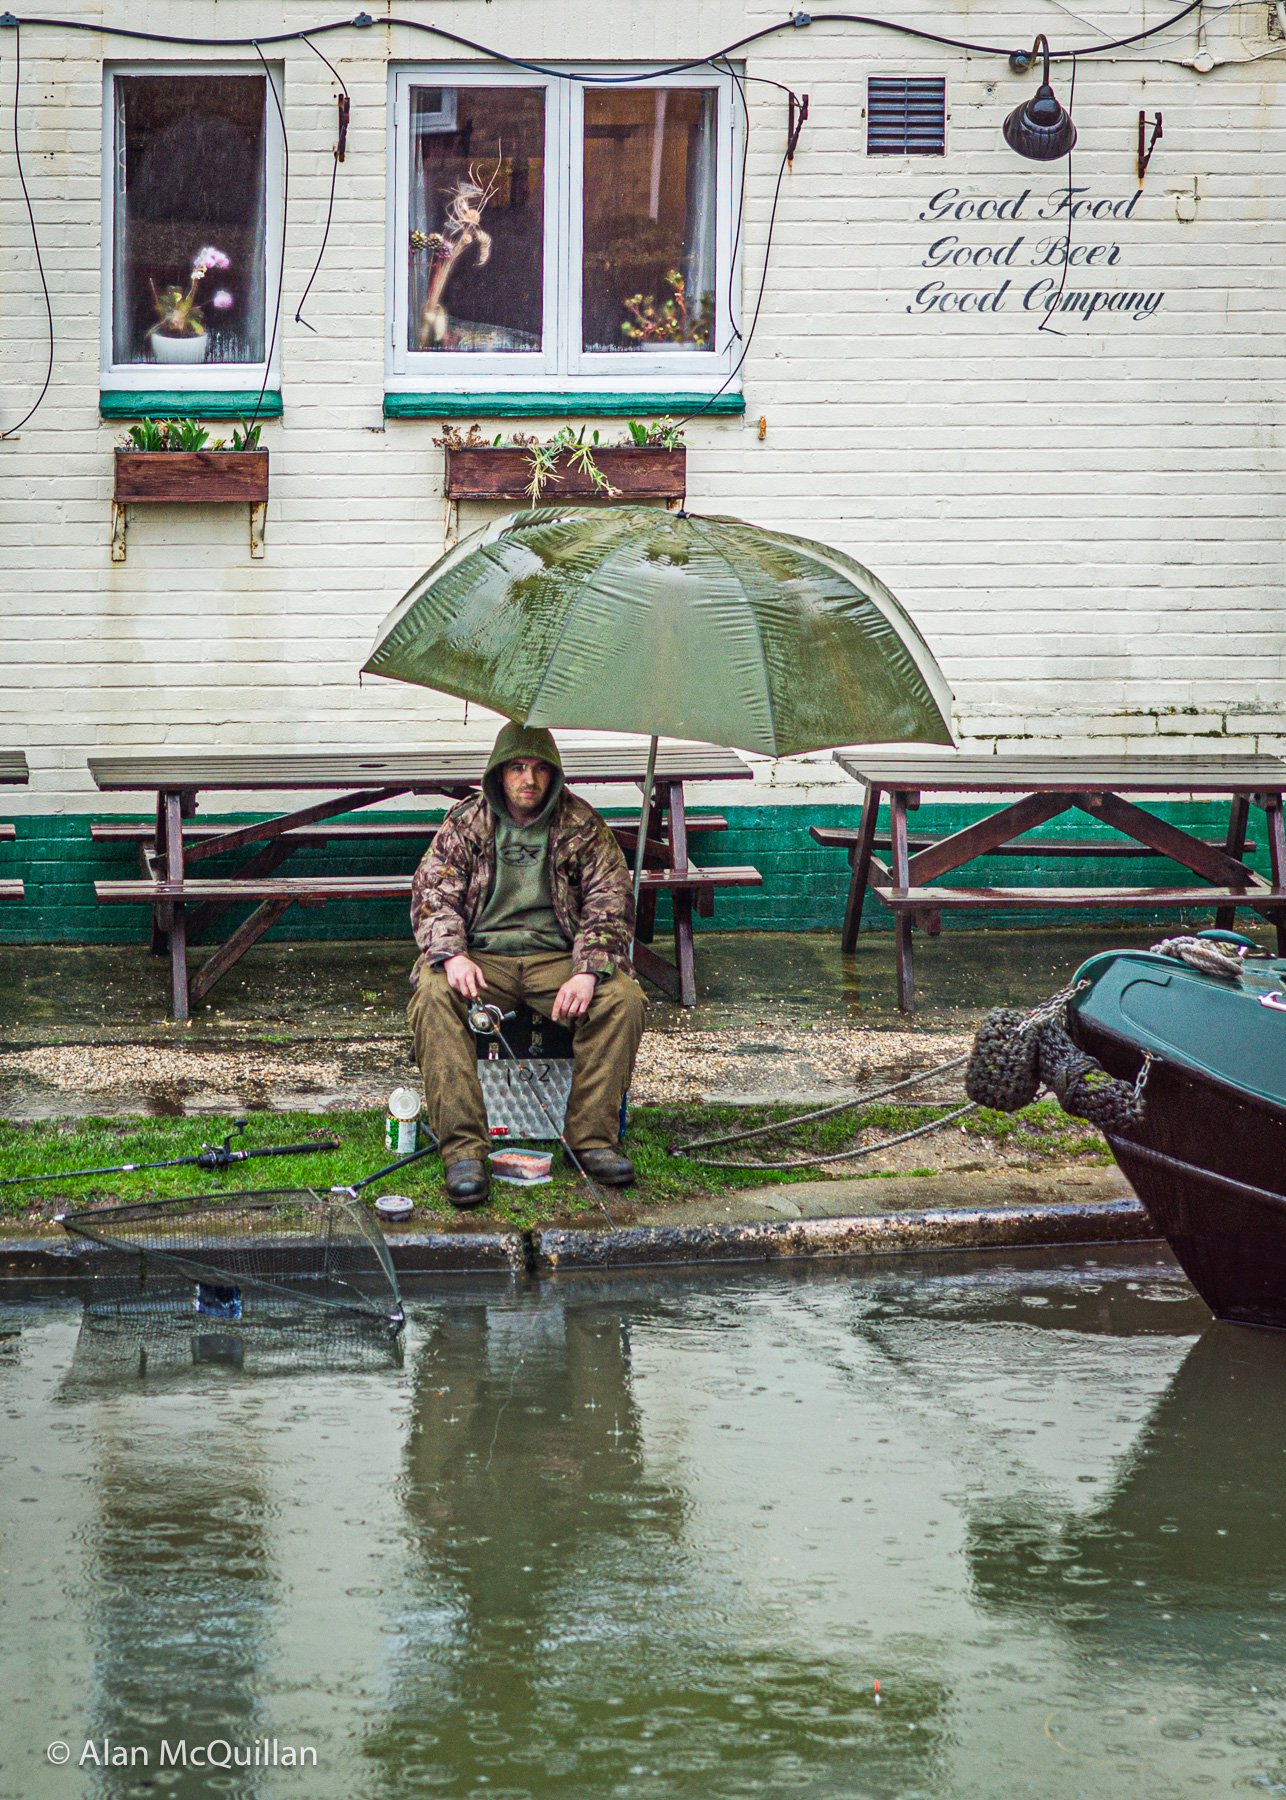 Fishing in the rain, Berkhamsted, England, 2018